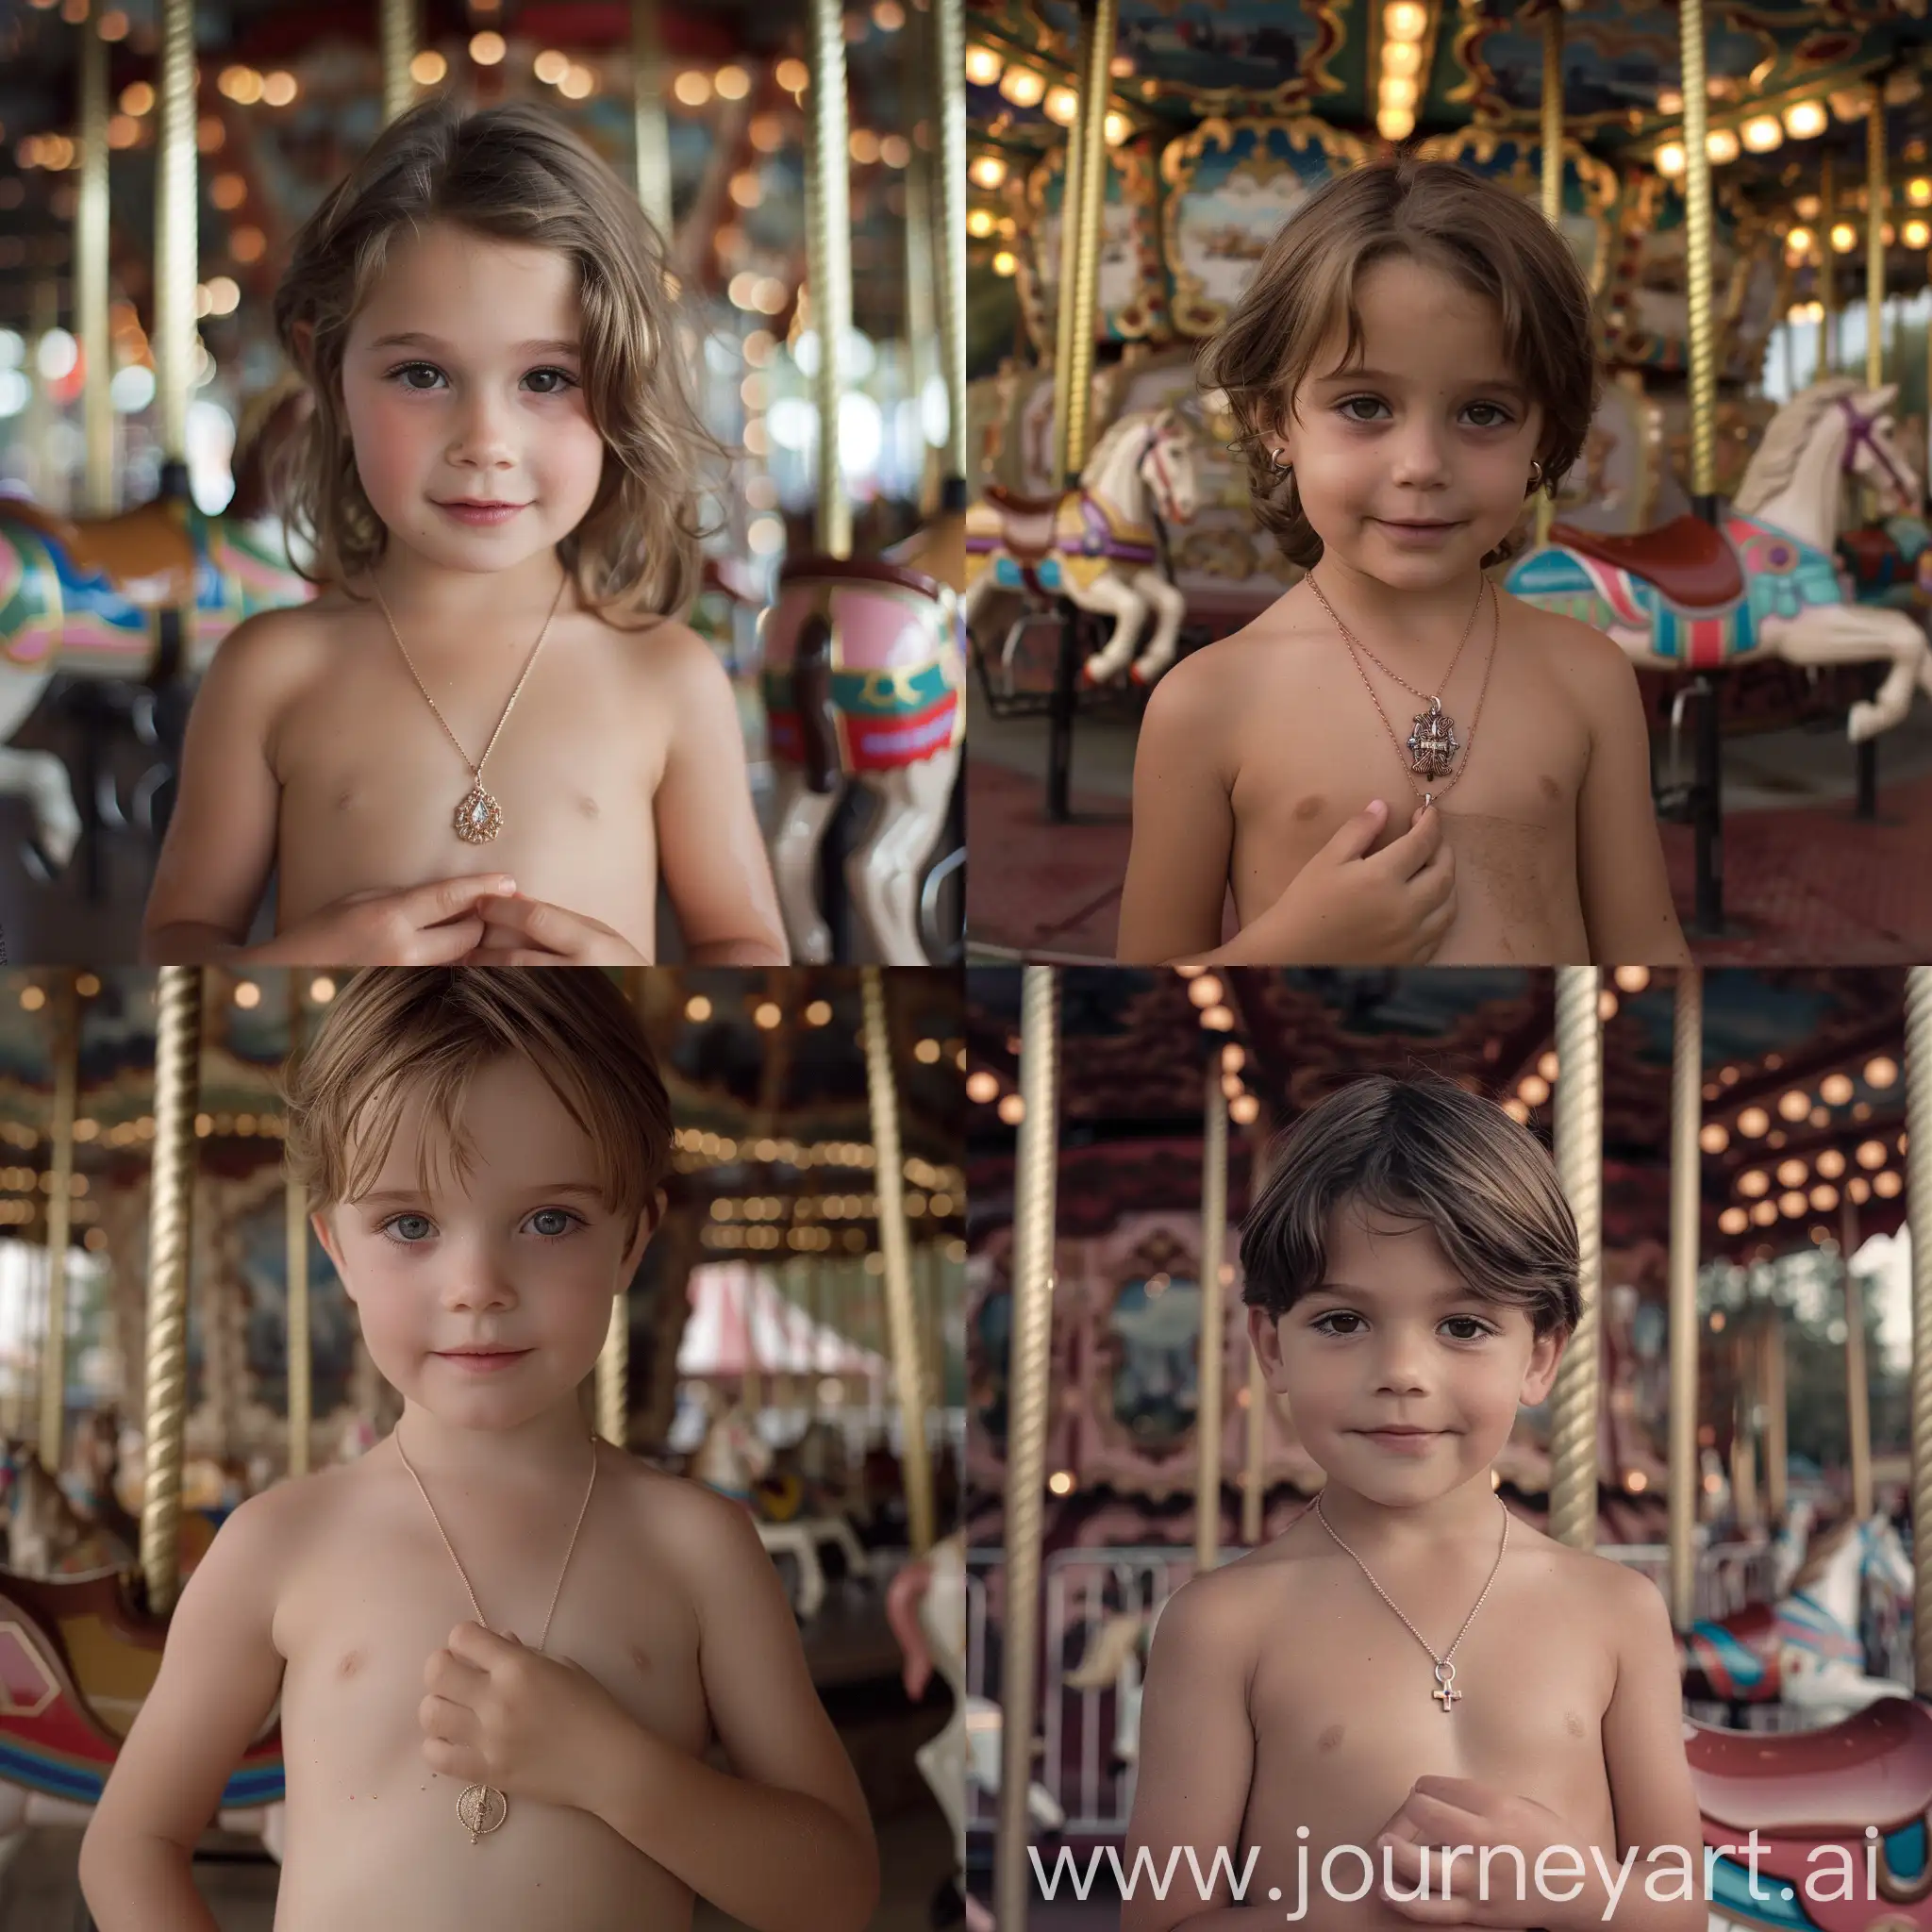 Caucasian-Girl-Admiring-Necklace-at-Amusement-Park-Carousel